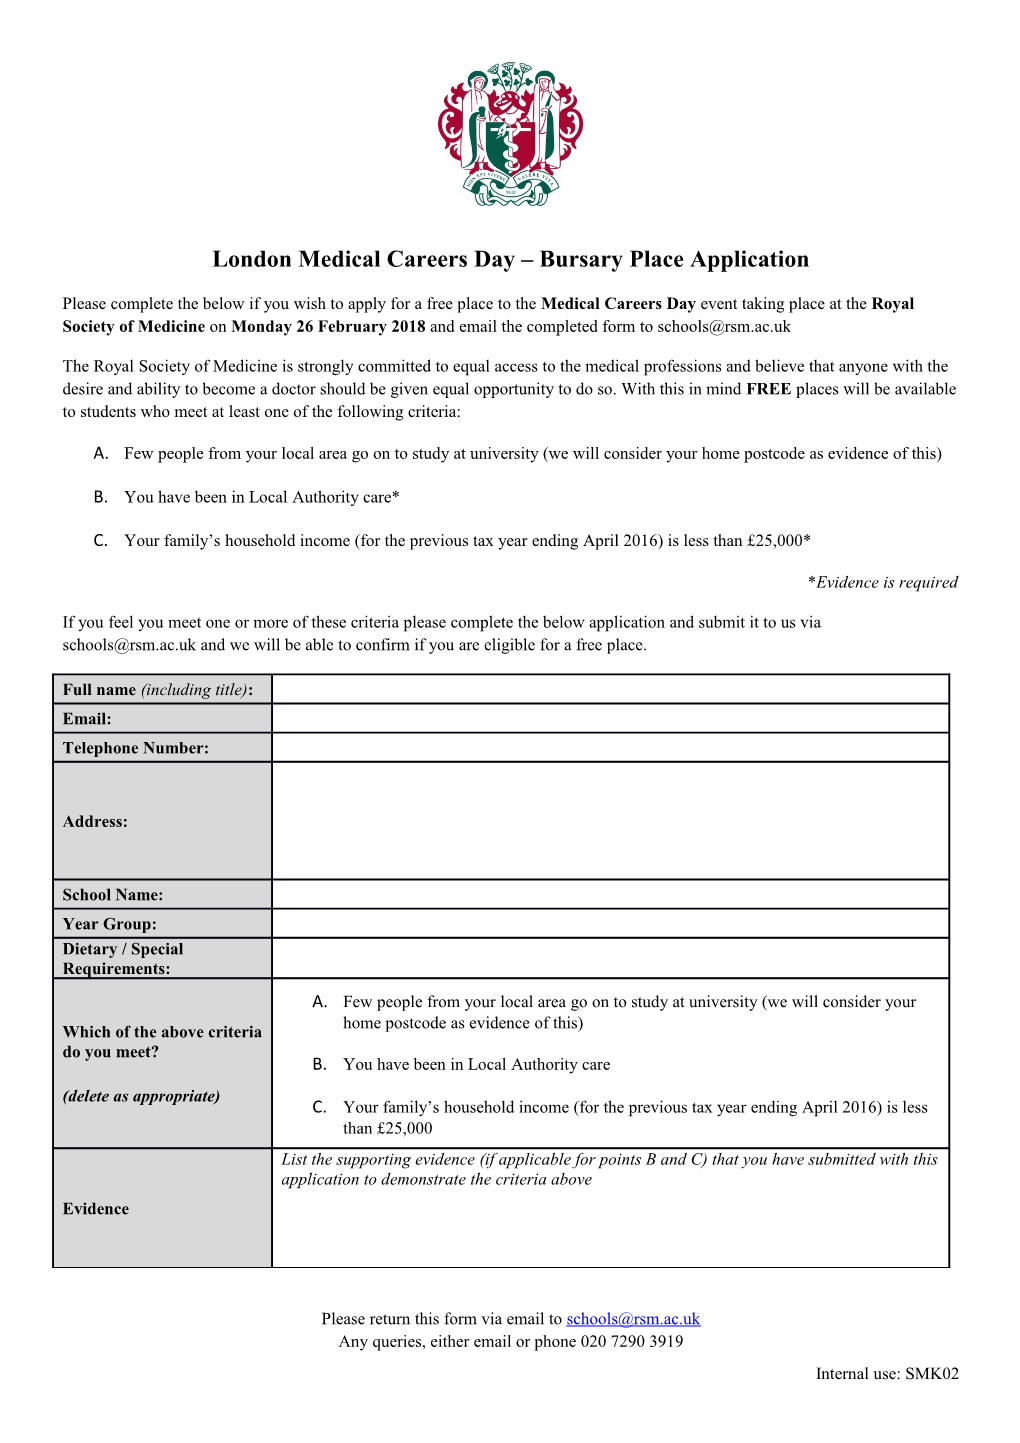 London Medical Careers Day Bursary Place Application